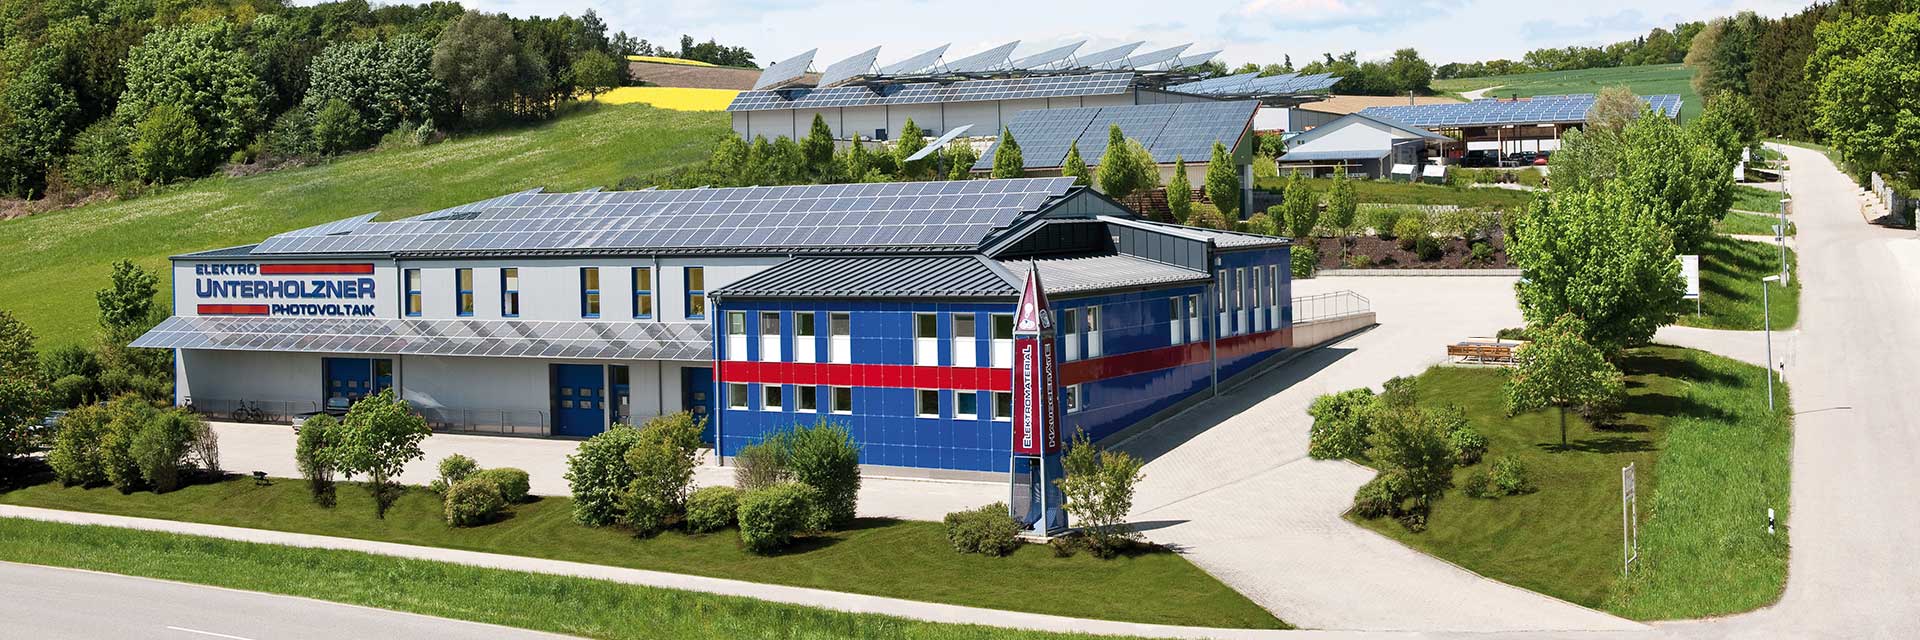 Unterholzner Photovoltaik